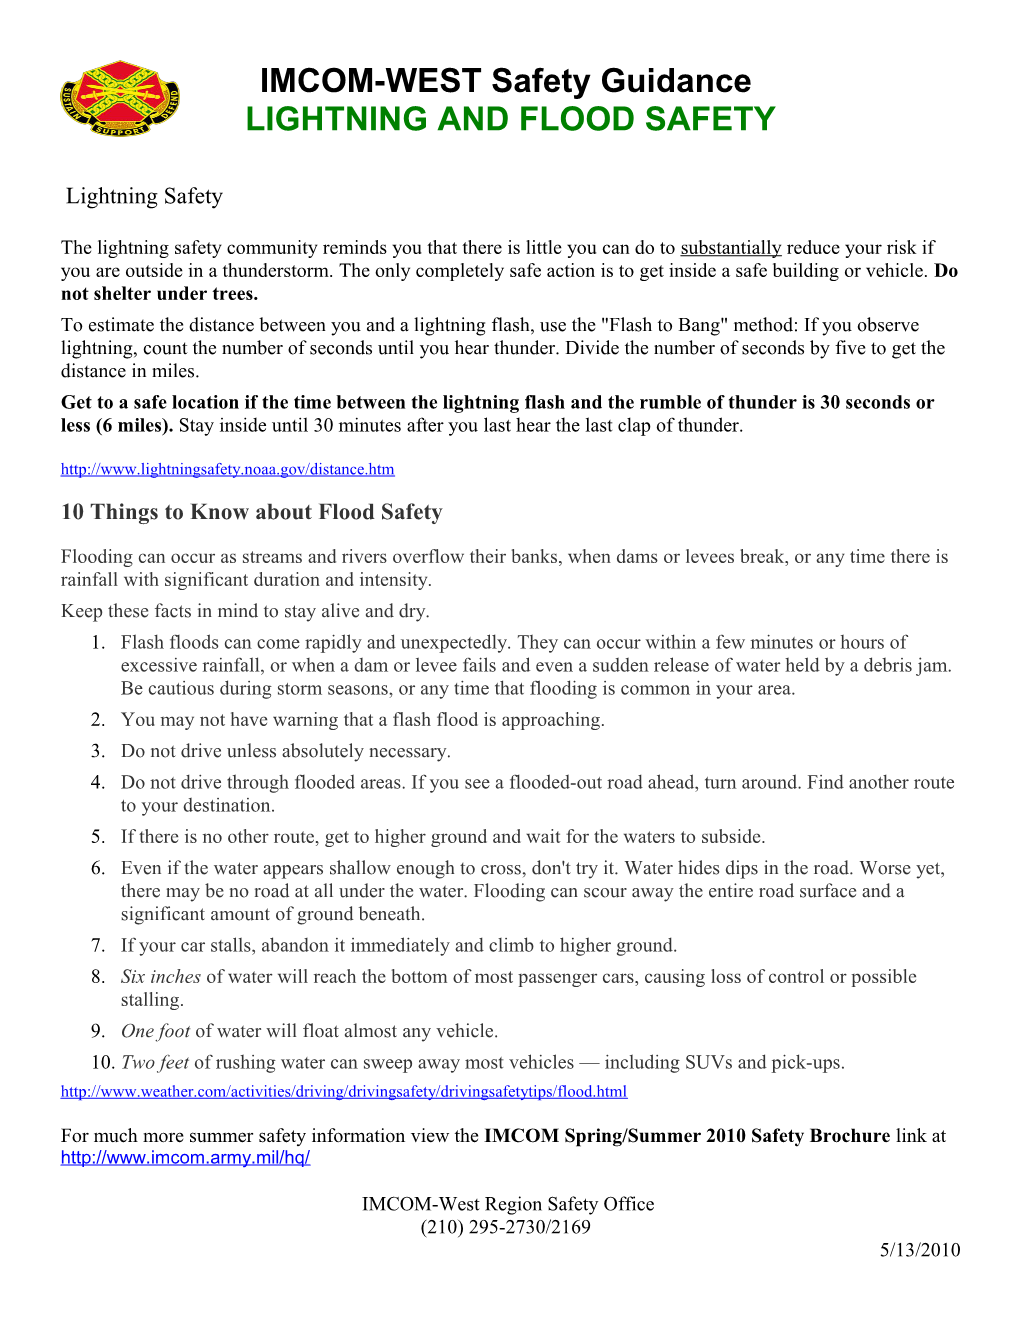 Lightning and Flood Safety